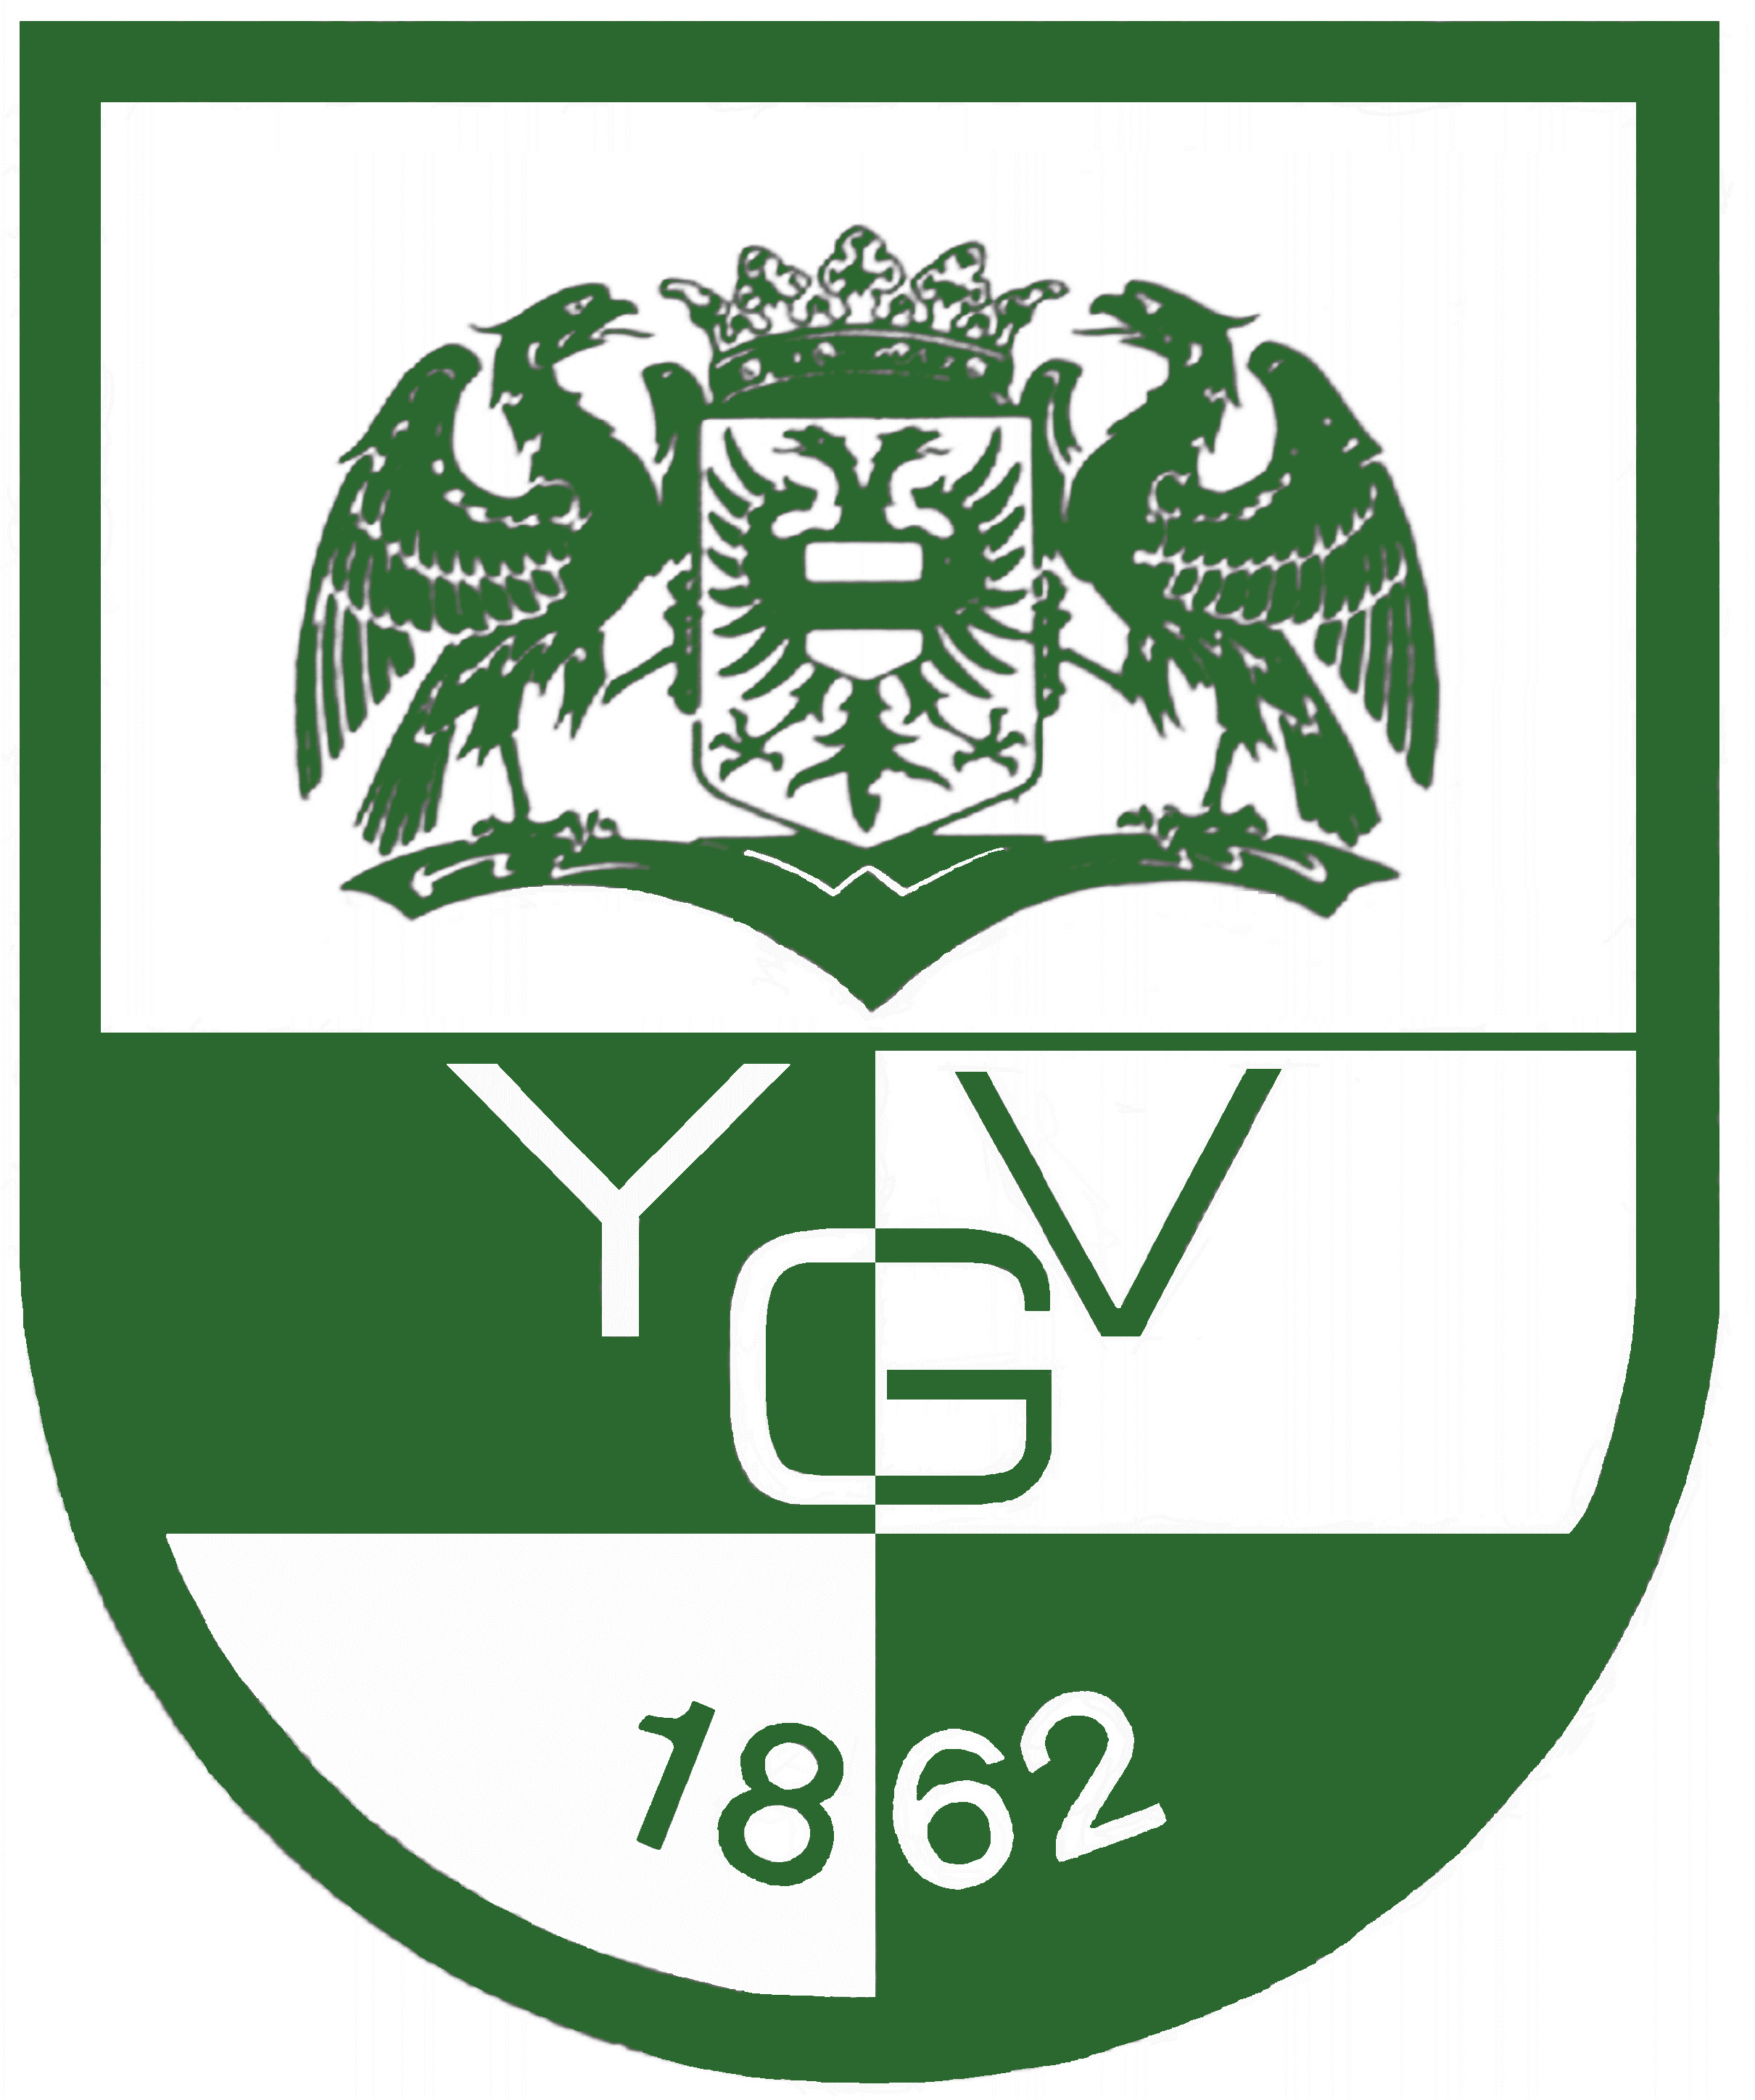 yvg-logo-groen